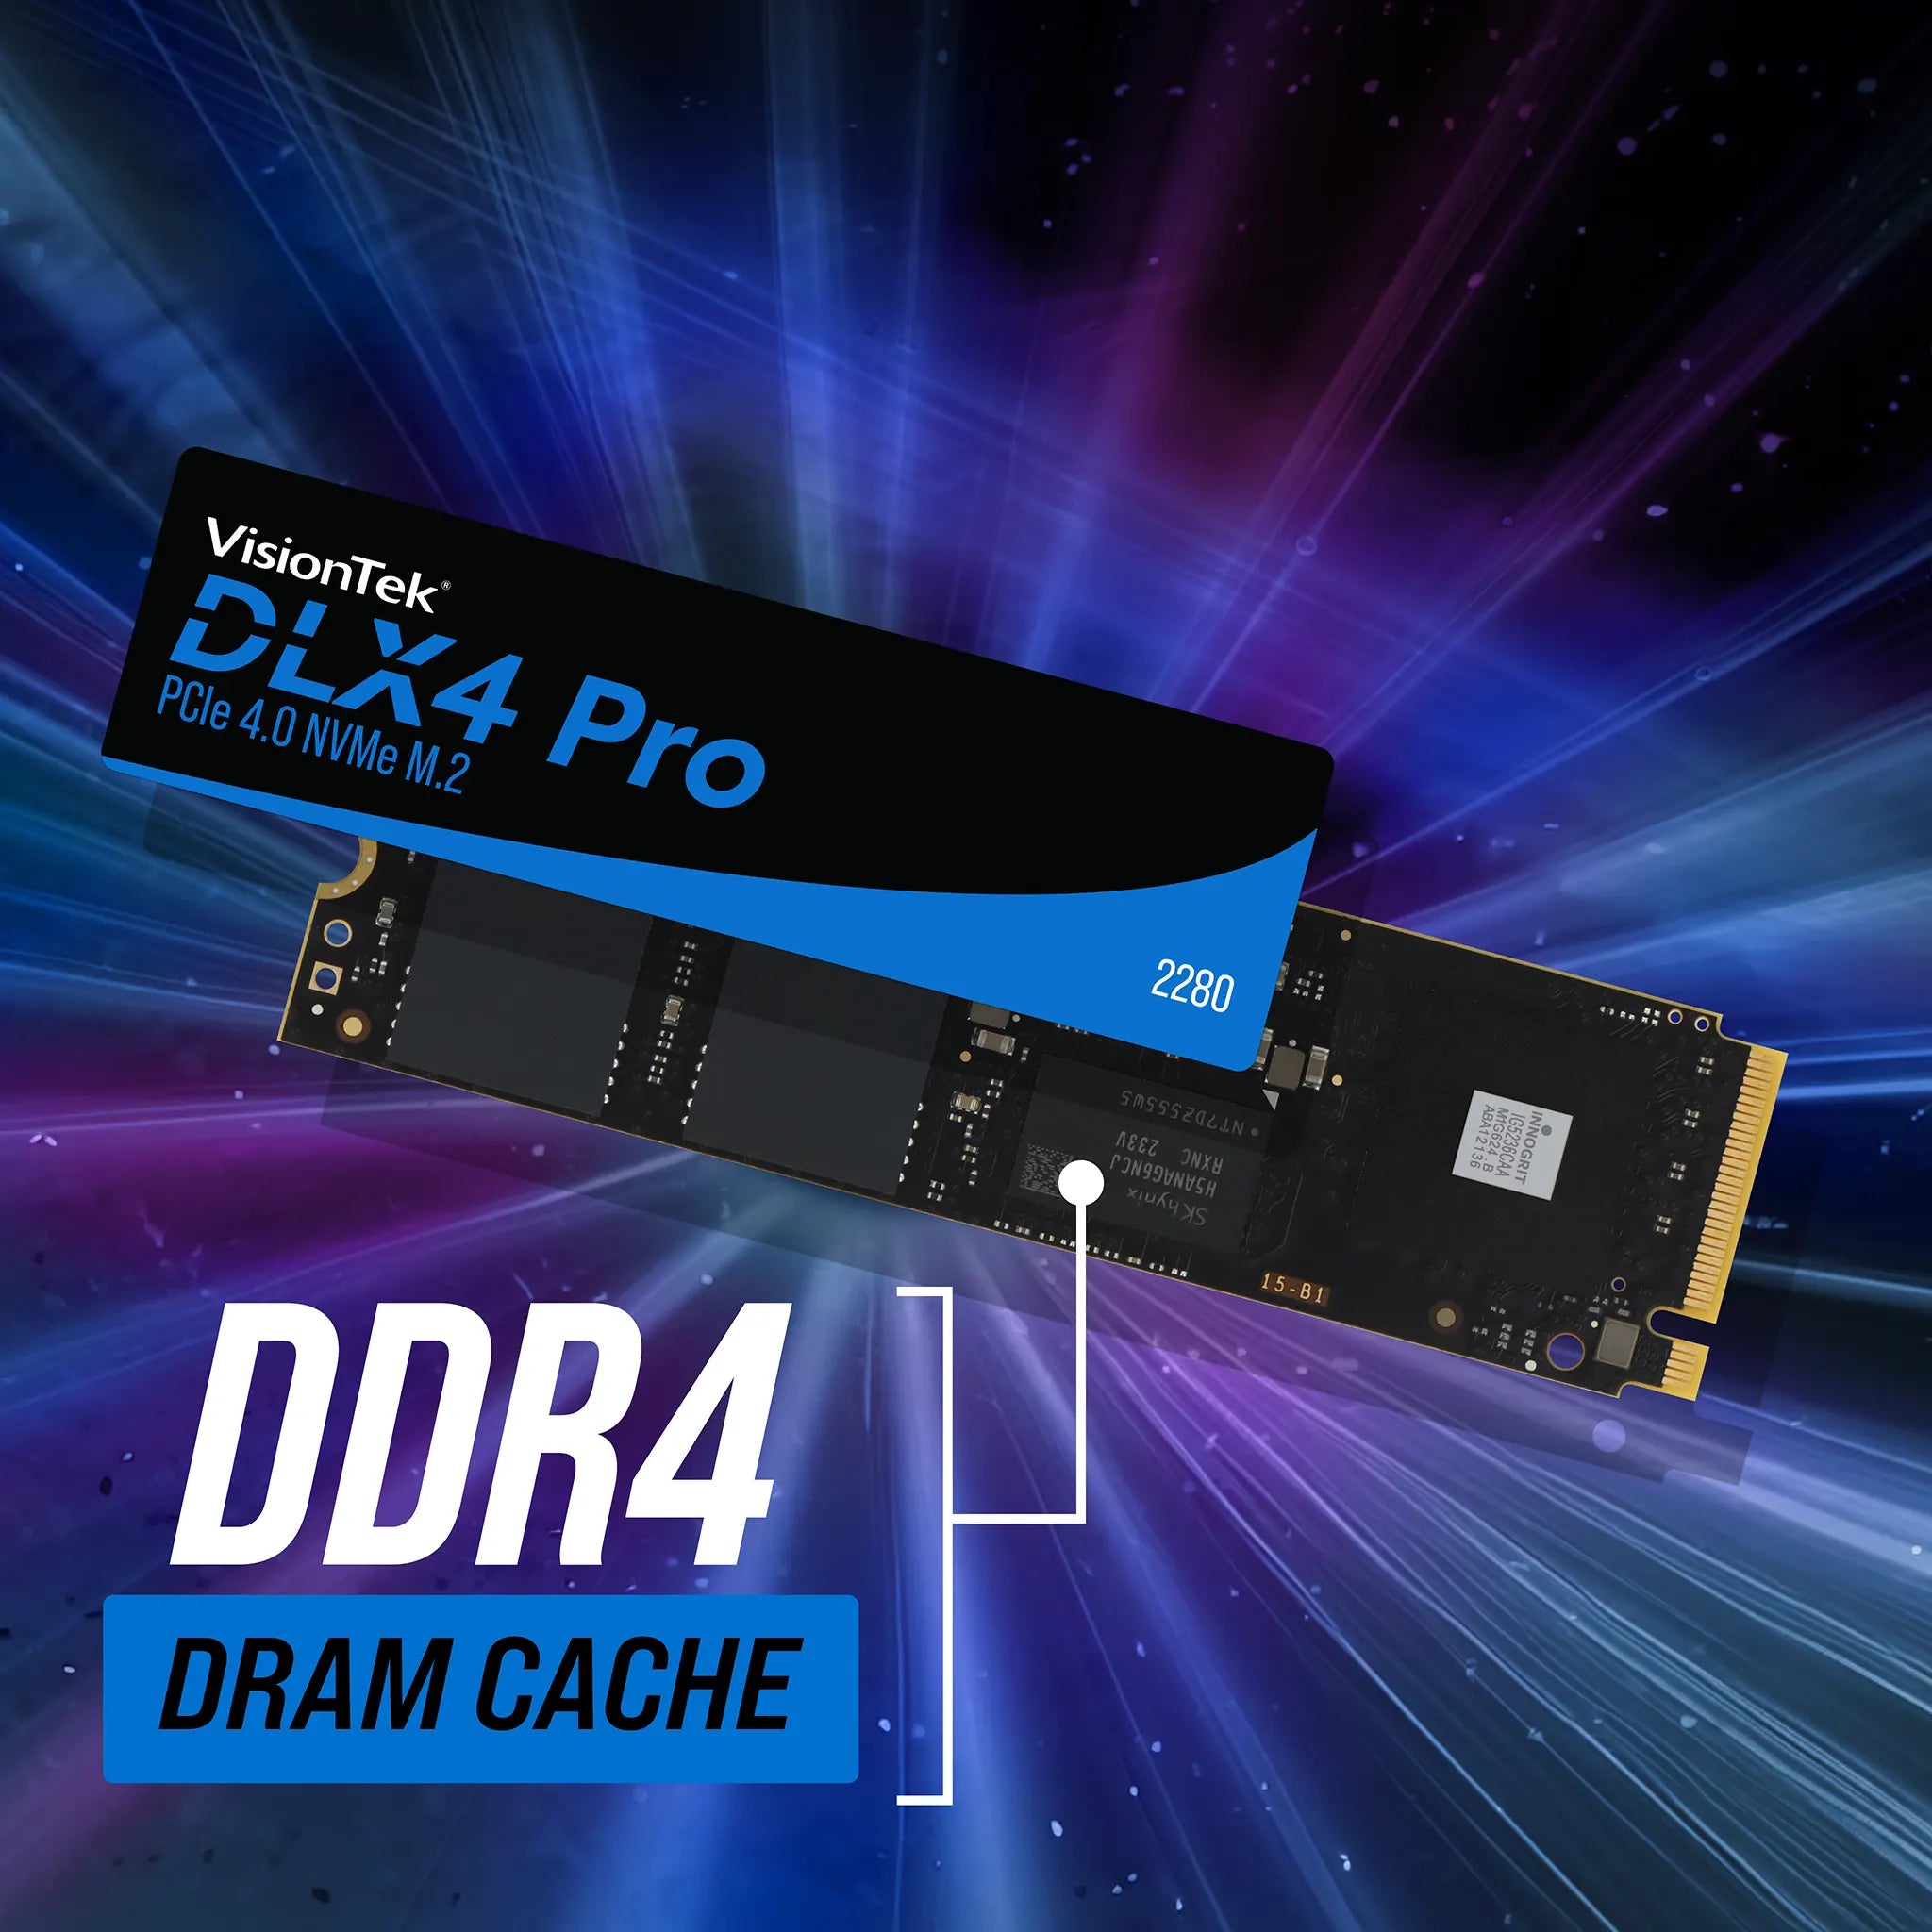 VisionTek DLX4 Pro 2280 M.2 PCIe 4.0 x4 SSD (NVMe) OPAL 2.0 SED